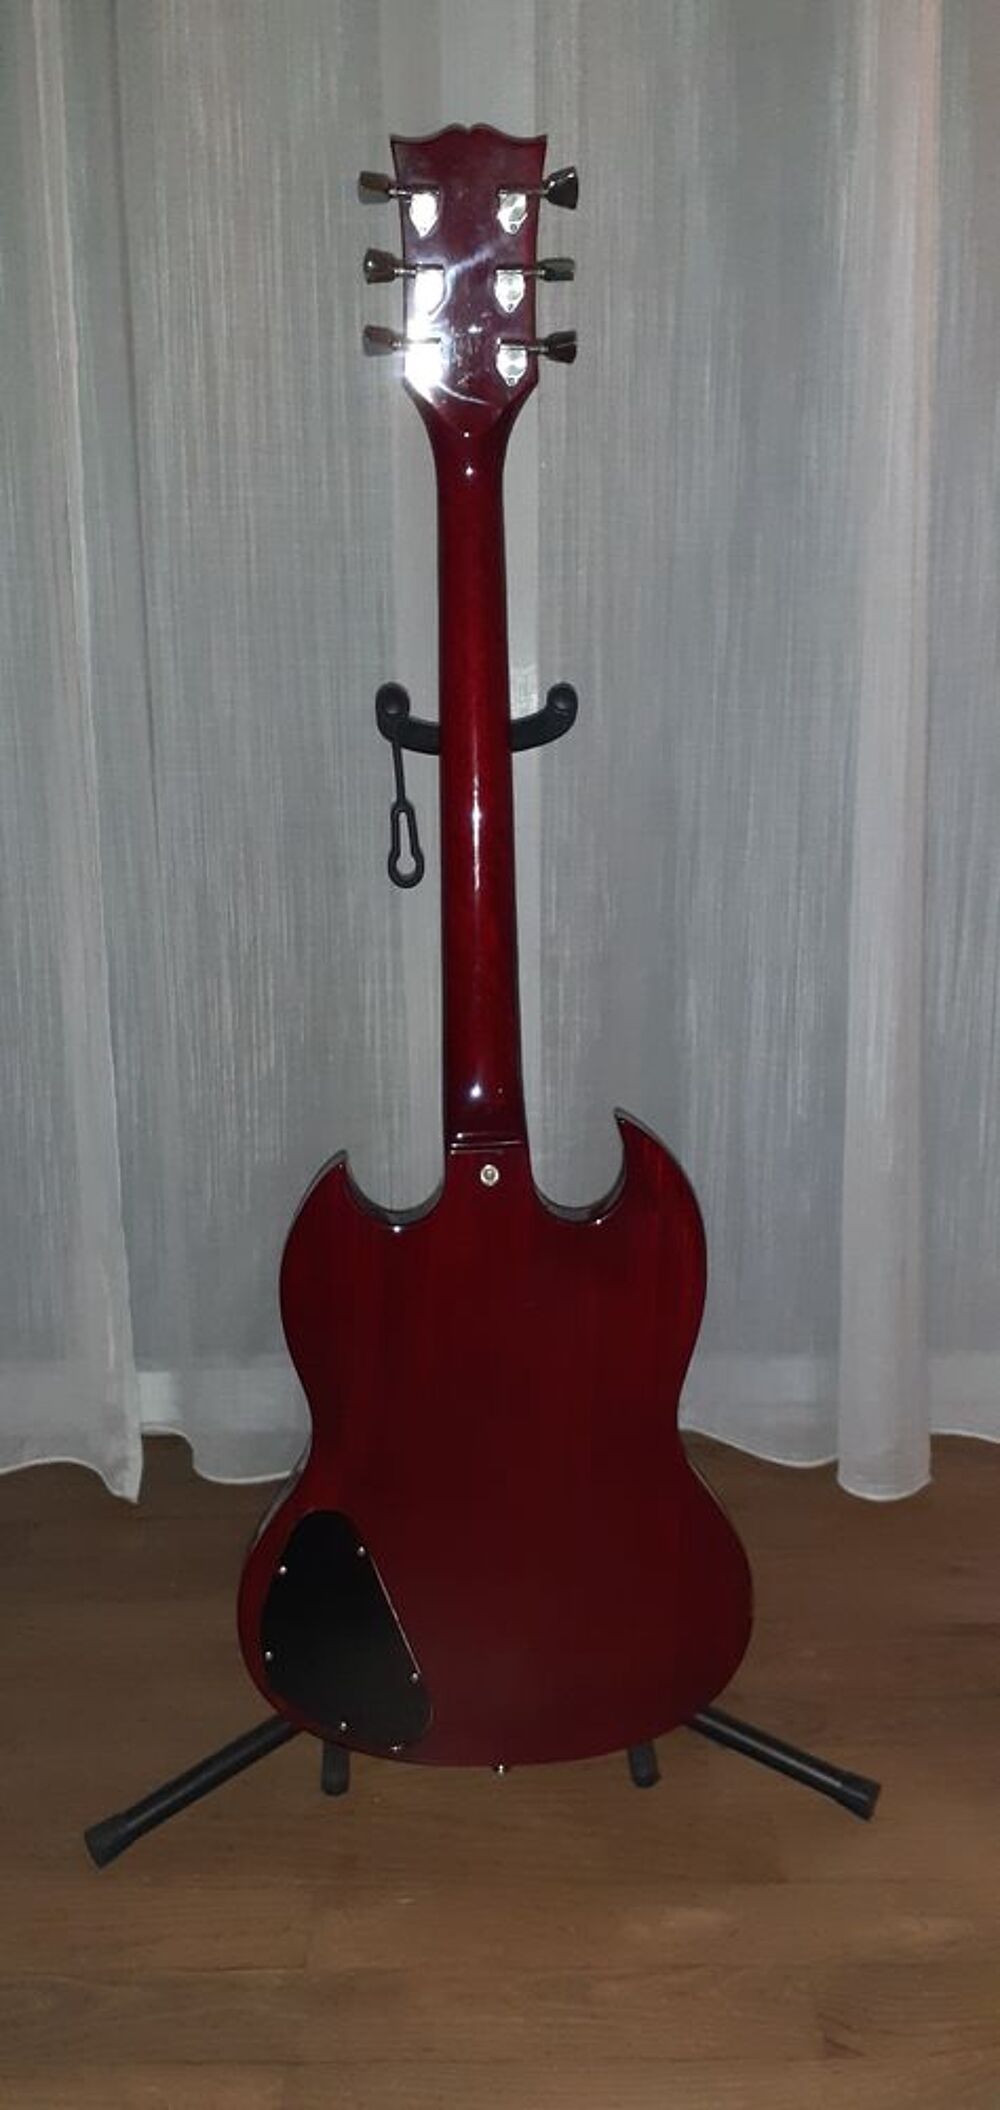 Guitare Eagle copie Gibson SG Instruments de musique